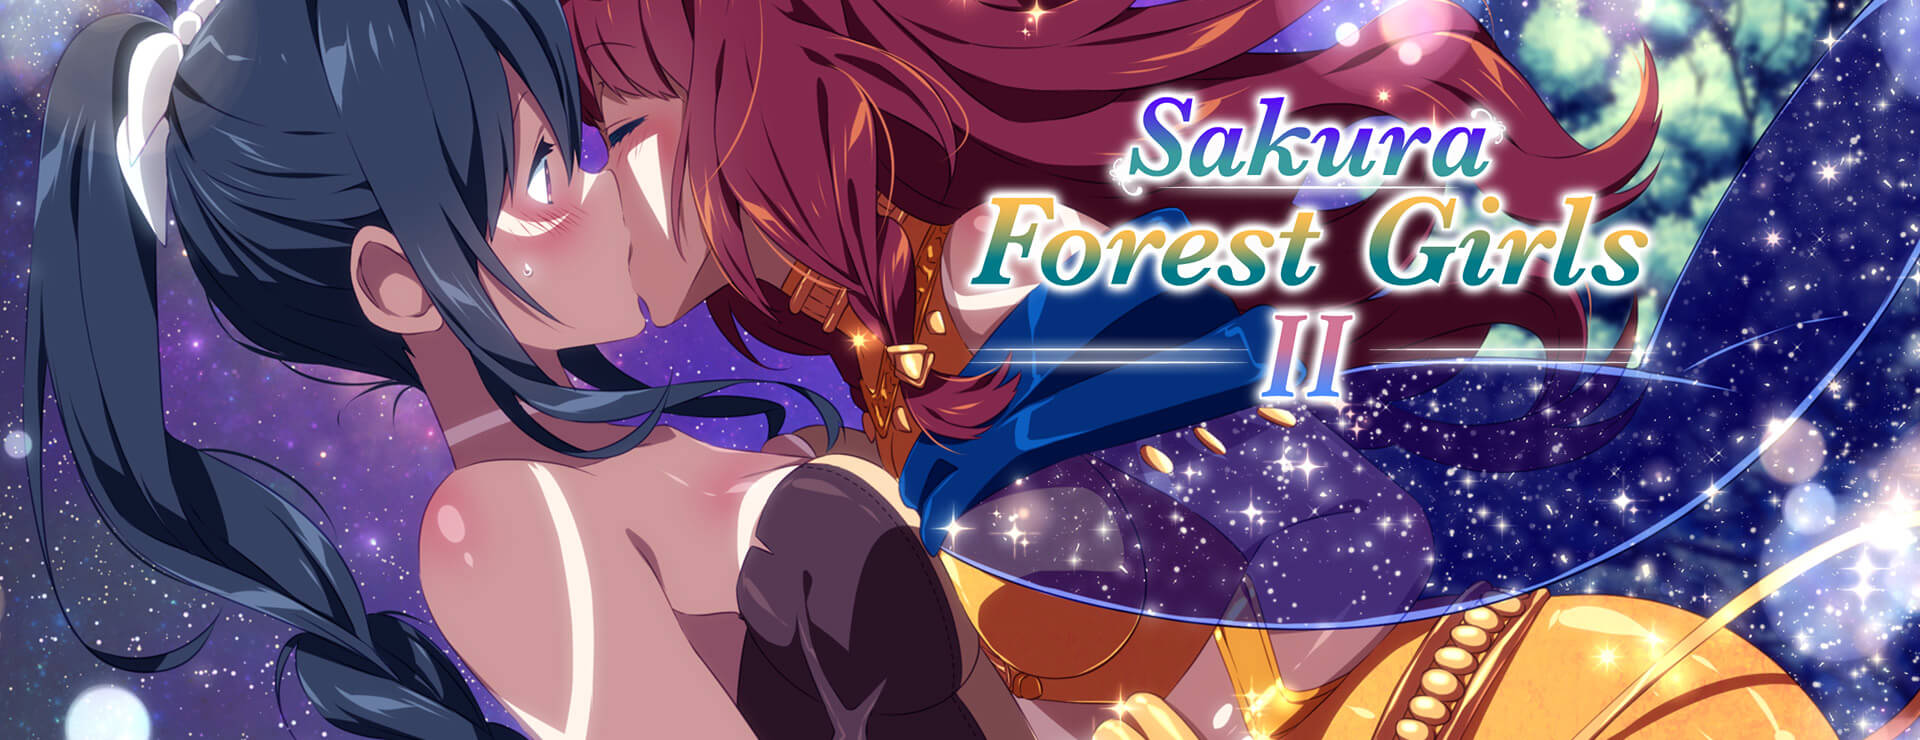 Sakura Forest Girls 2 - Novela Visual Juego